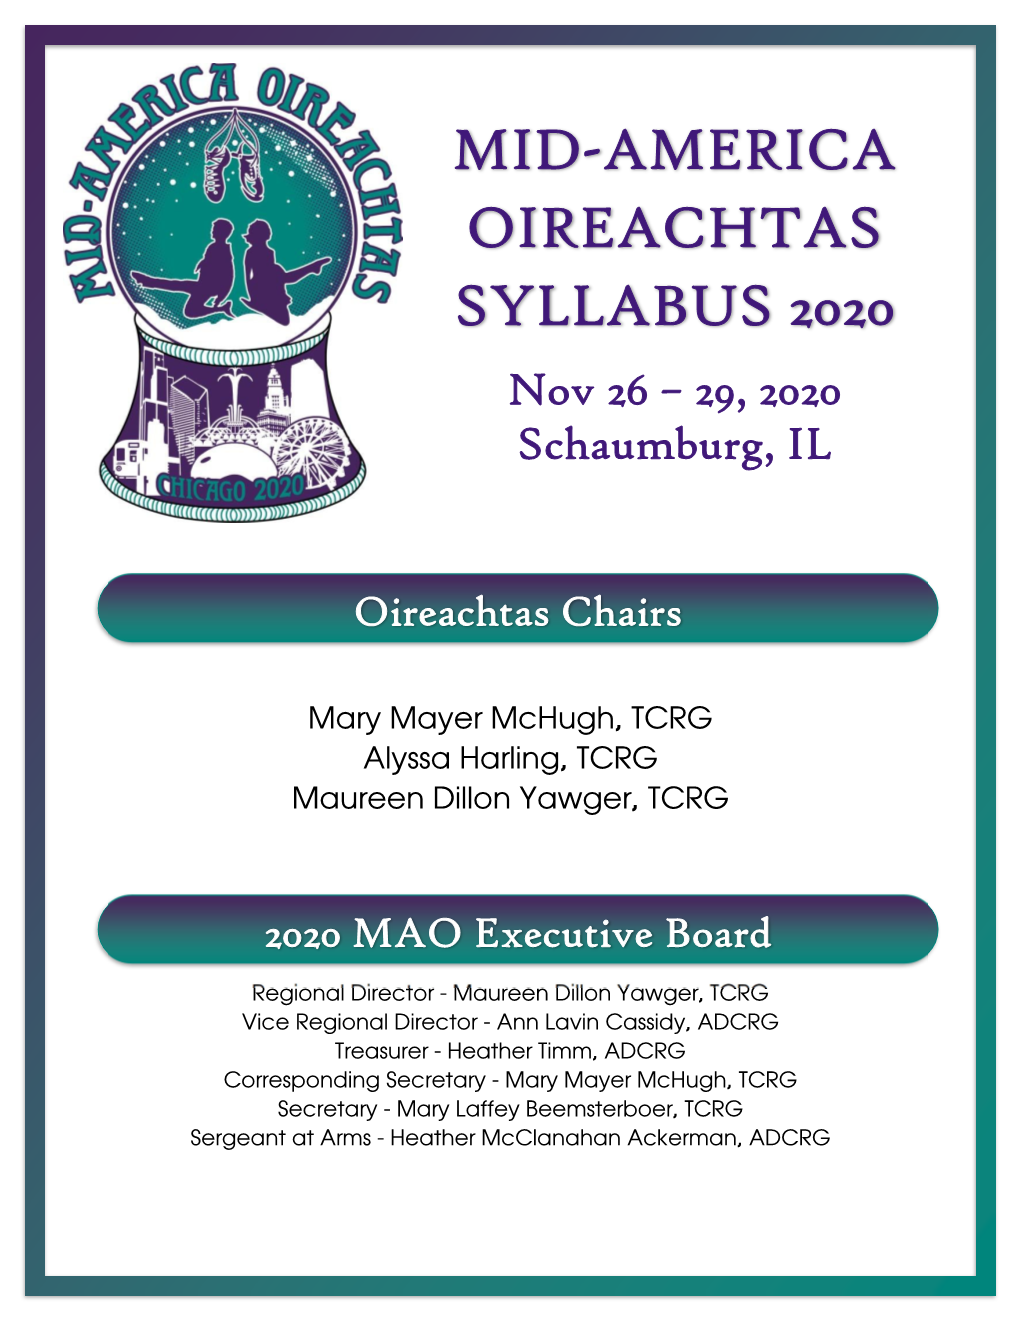 Mid-America Oireachtas Syllabus 2020